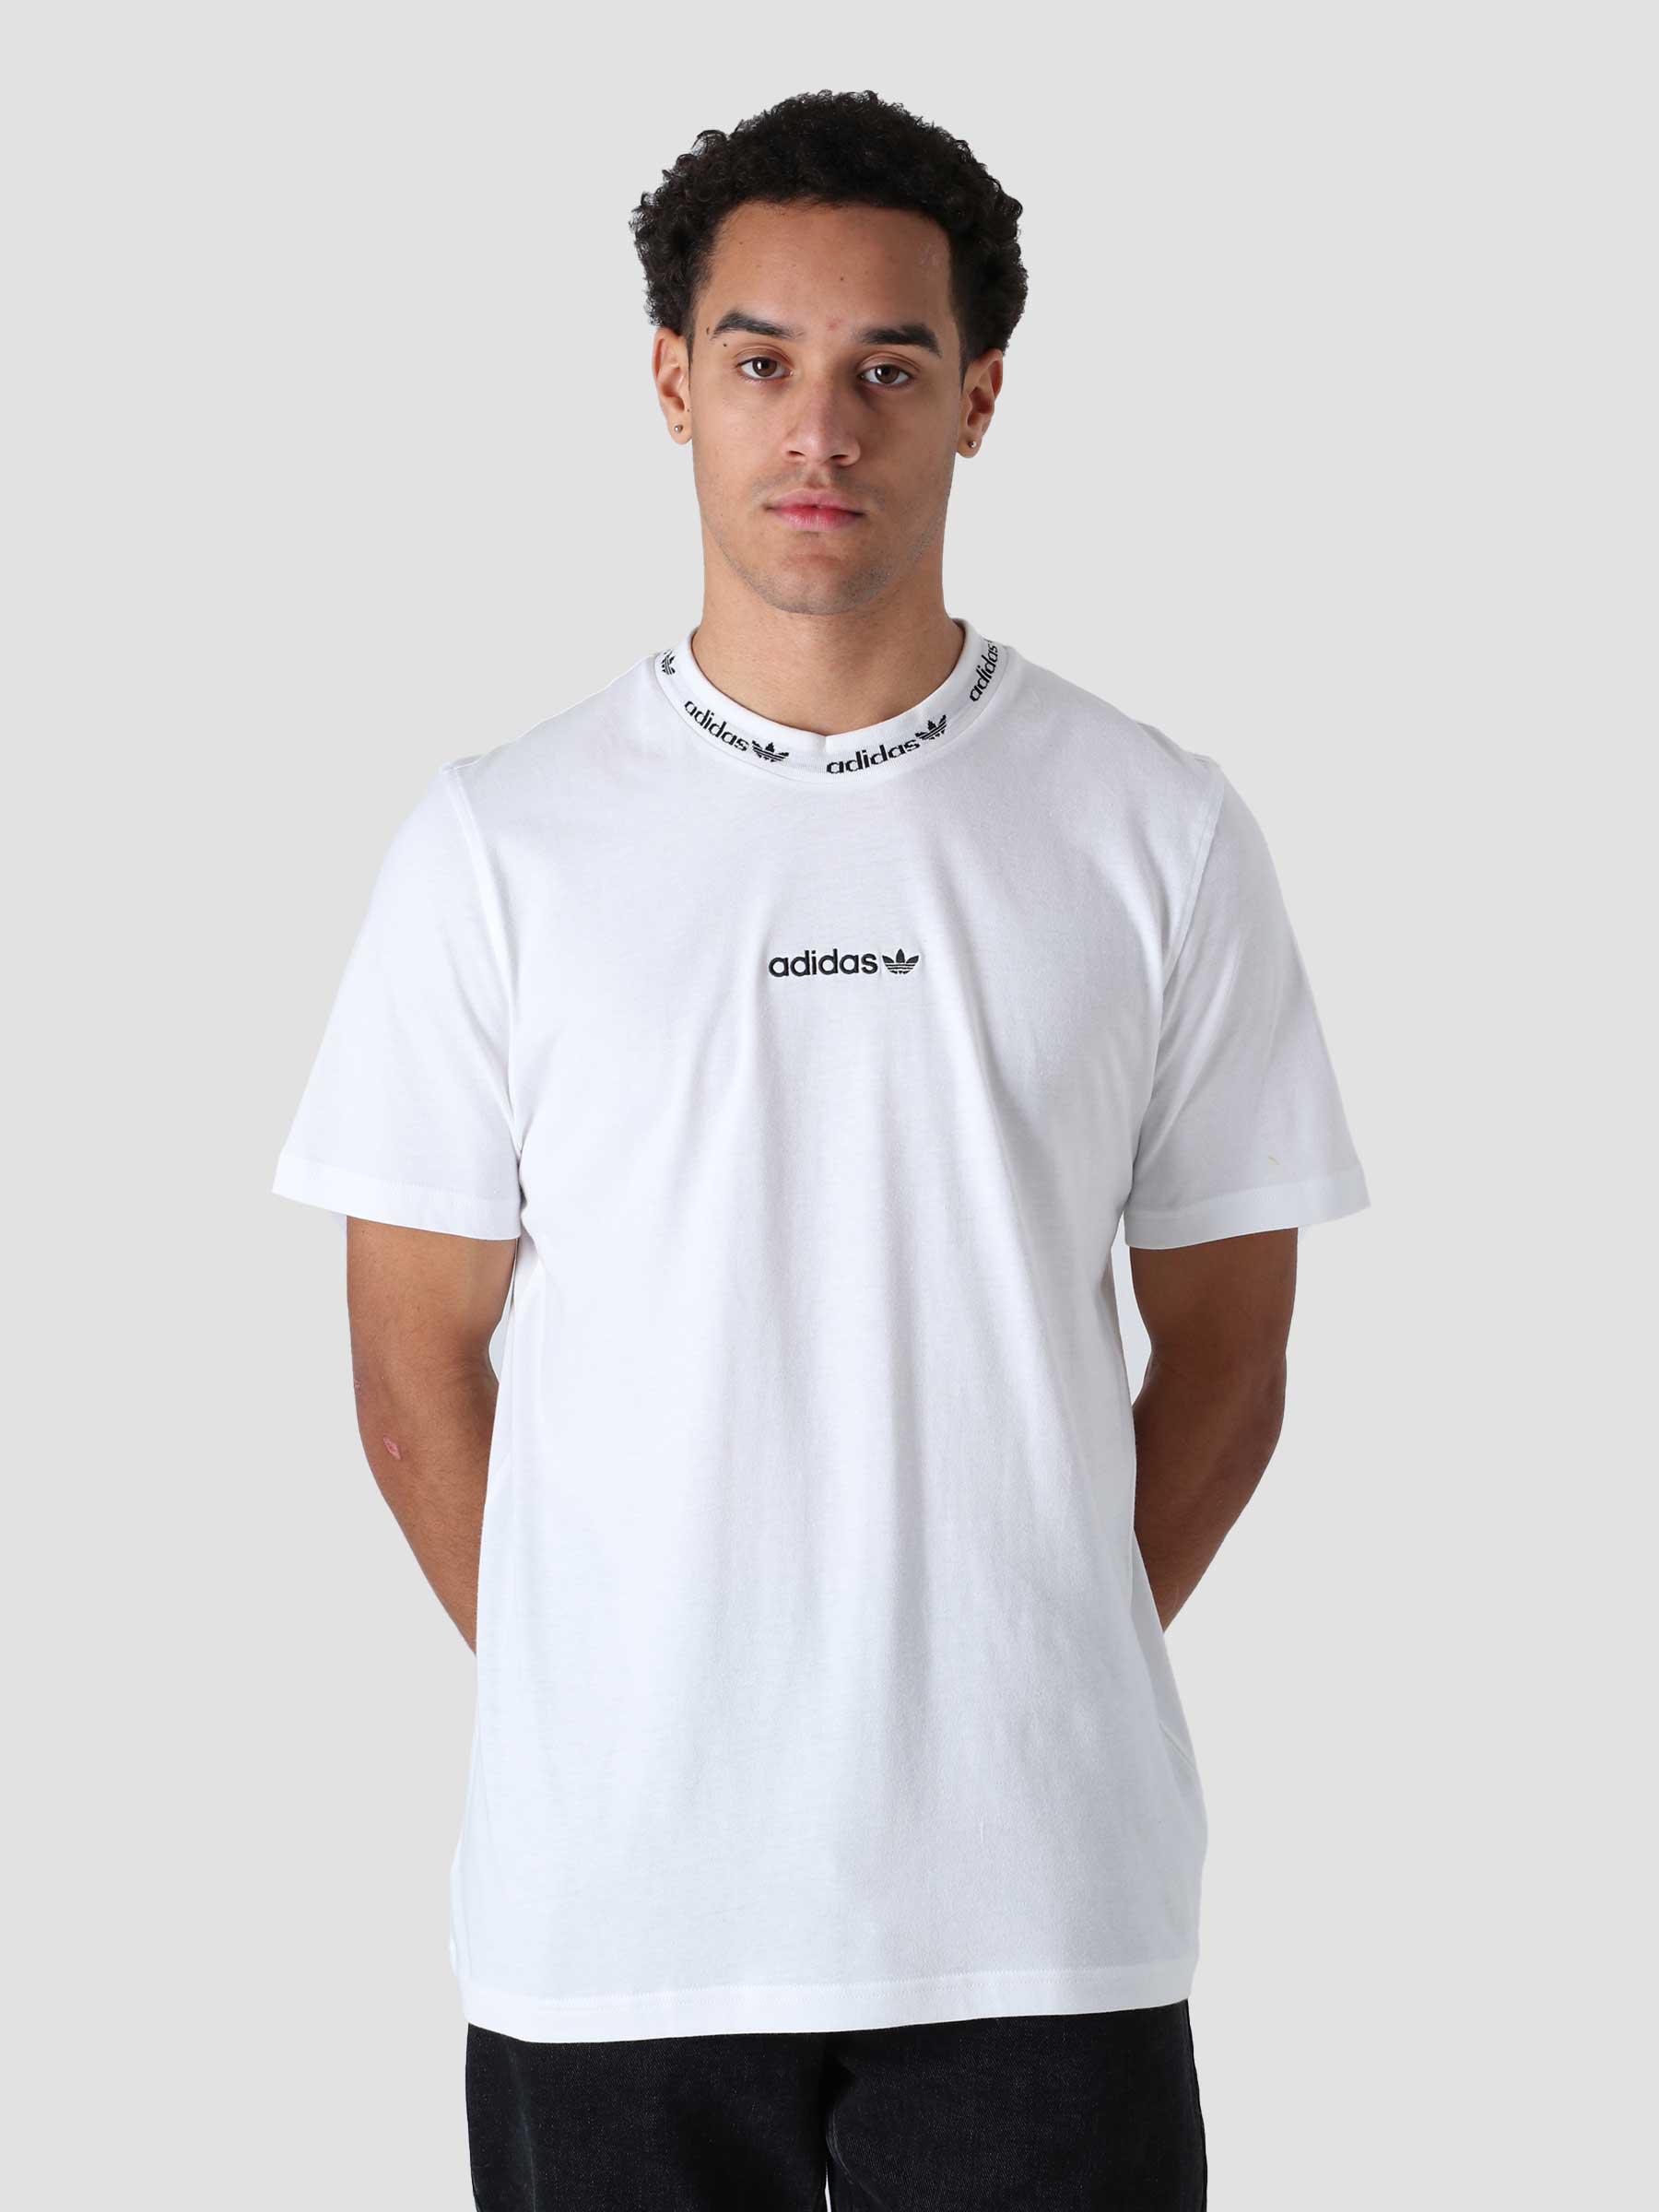 adidas TRF Linear T-Shirts White - Freshcotton